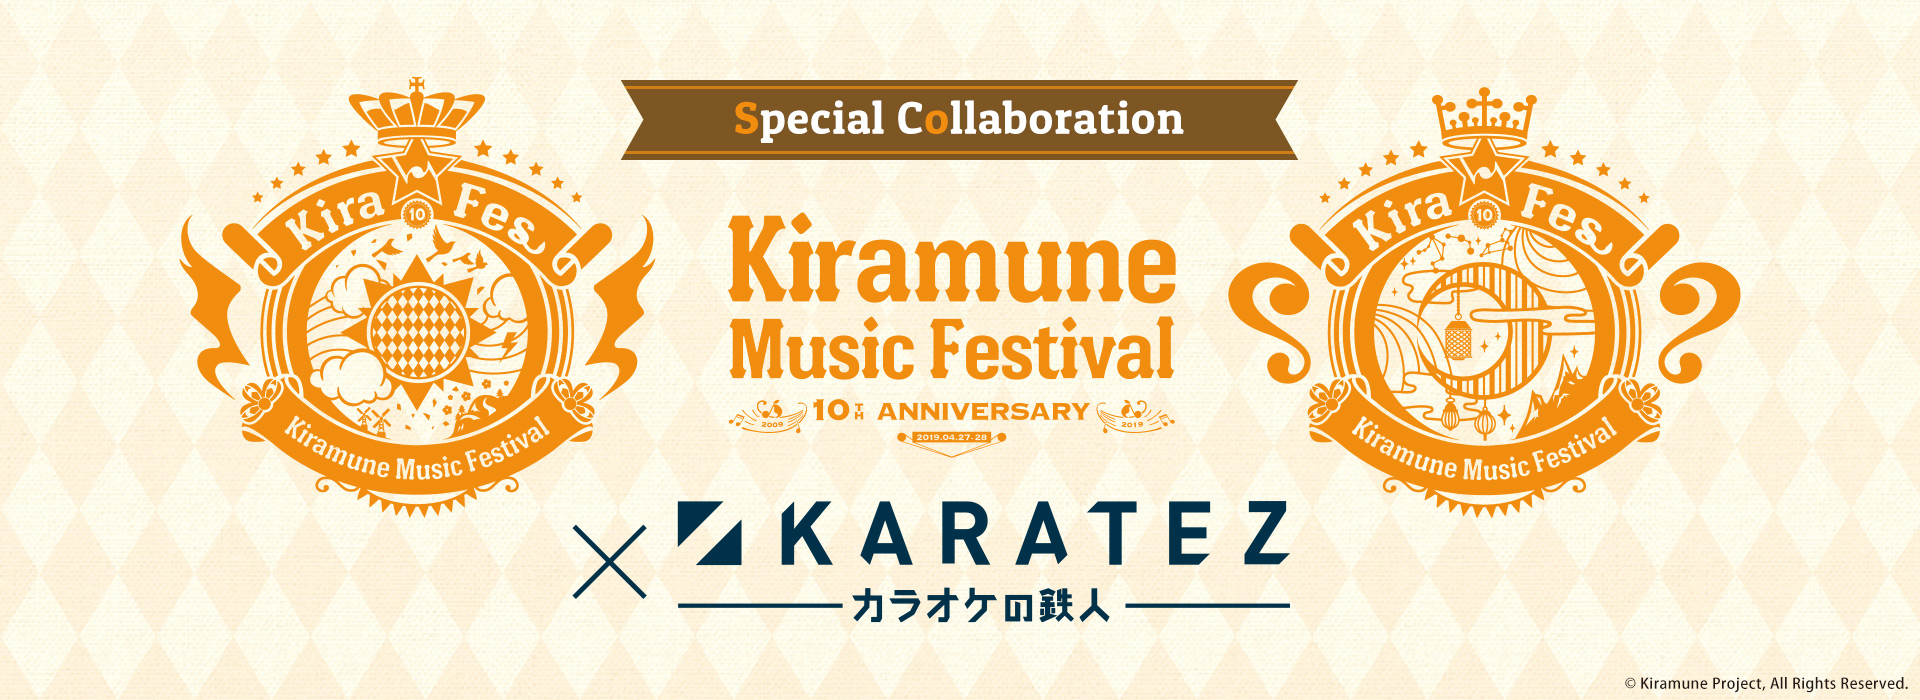 kiramune music festival 10thANNIVERSARY×カラオケの鉄人